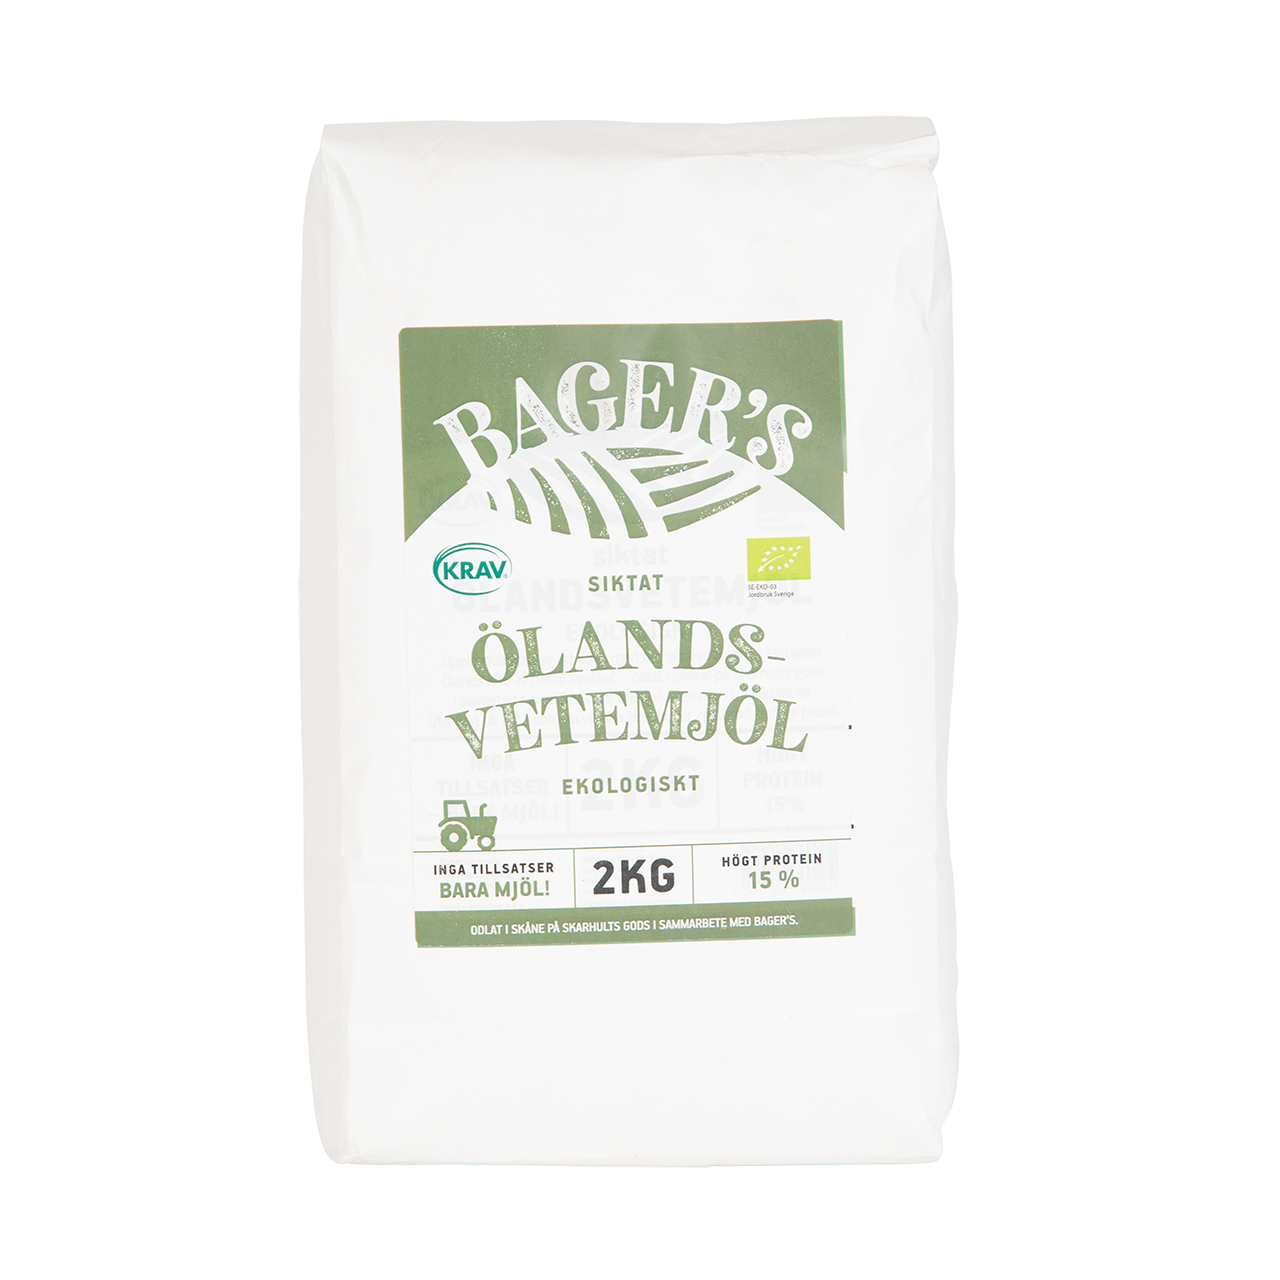 Bager's's Öland wheat flour sifted 2 kg bag ECO/KRAV marked'